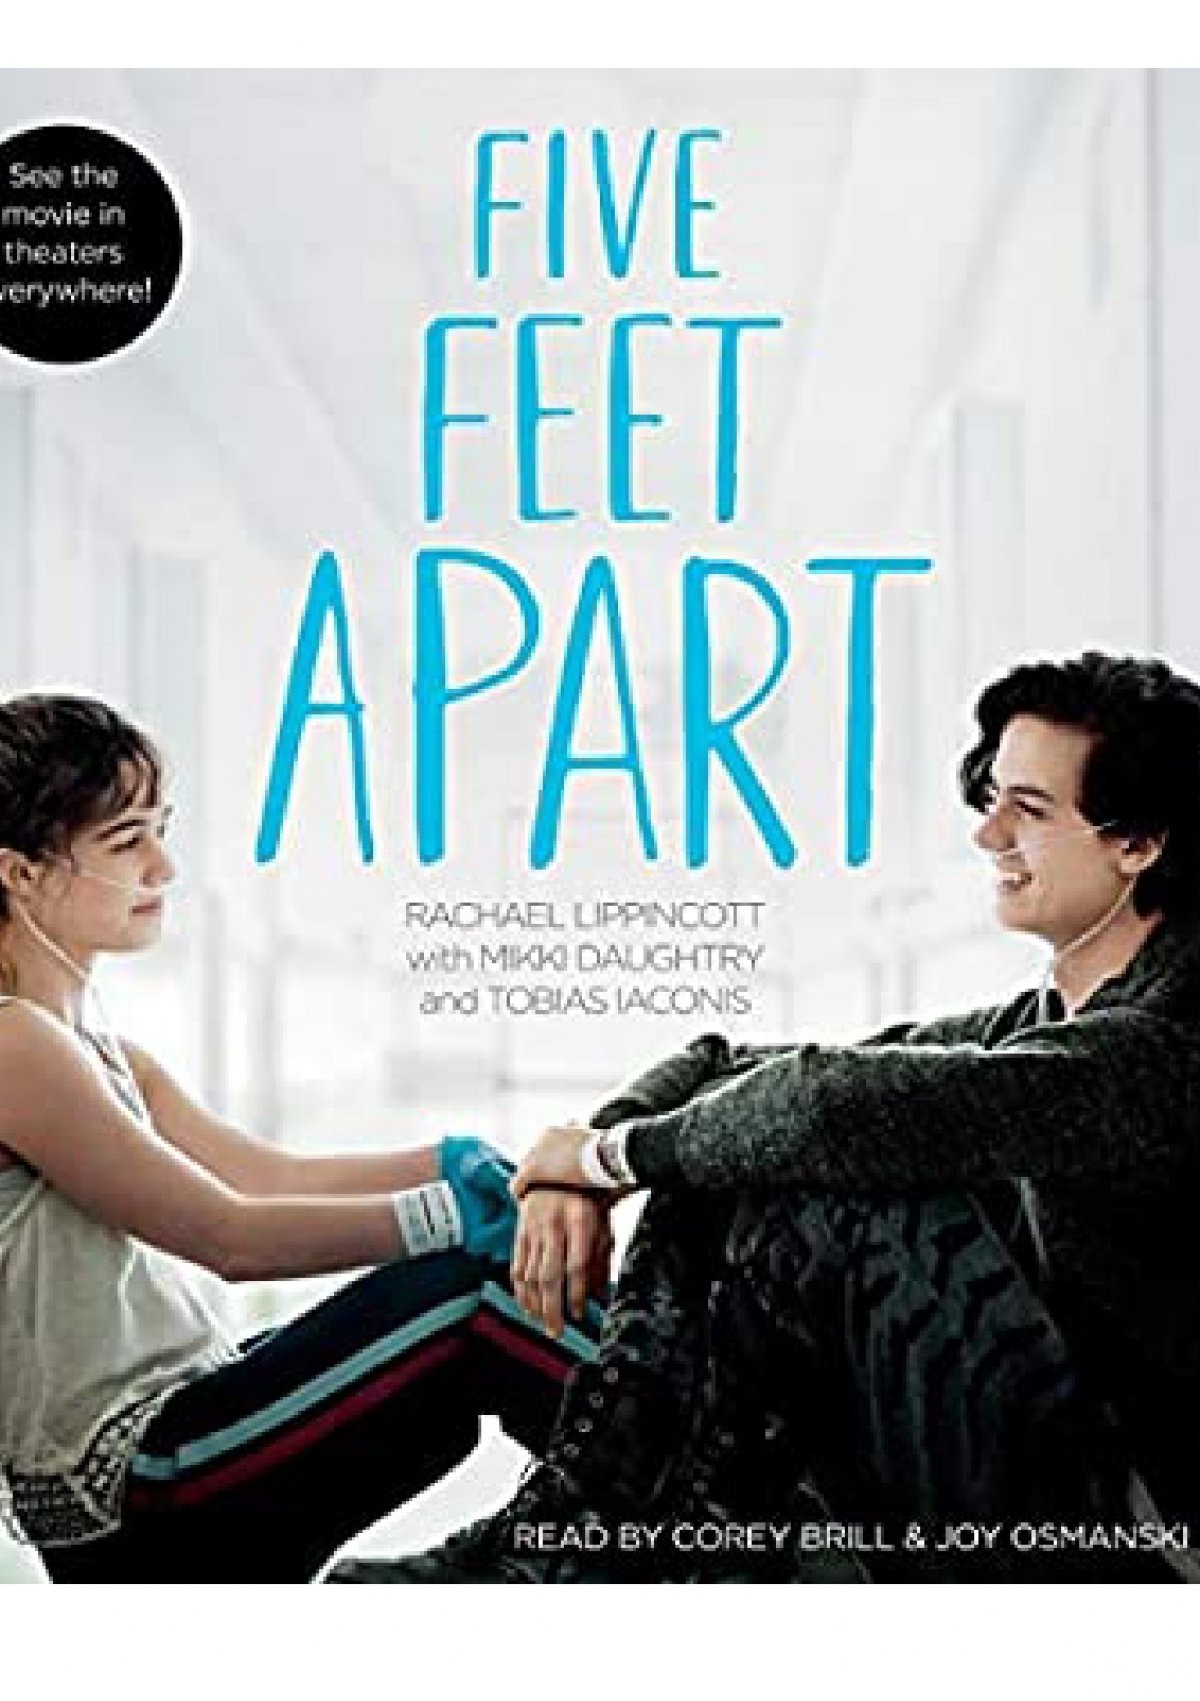 Apart novel feet five 4 Differences